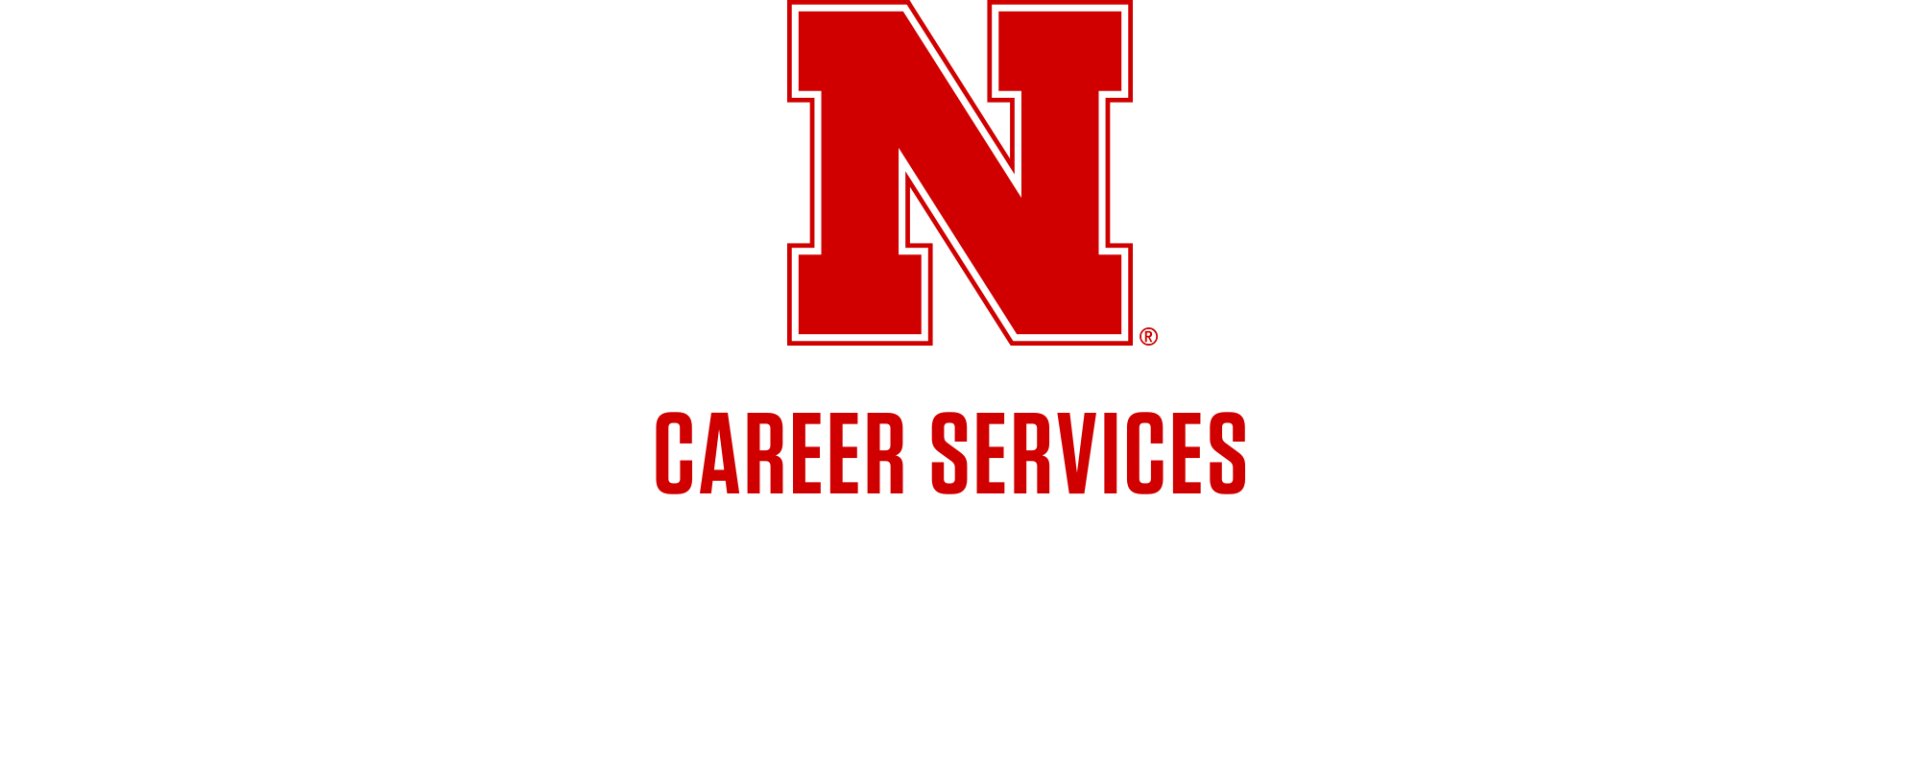 Career Services logo lockup